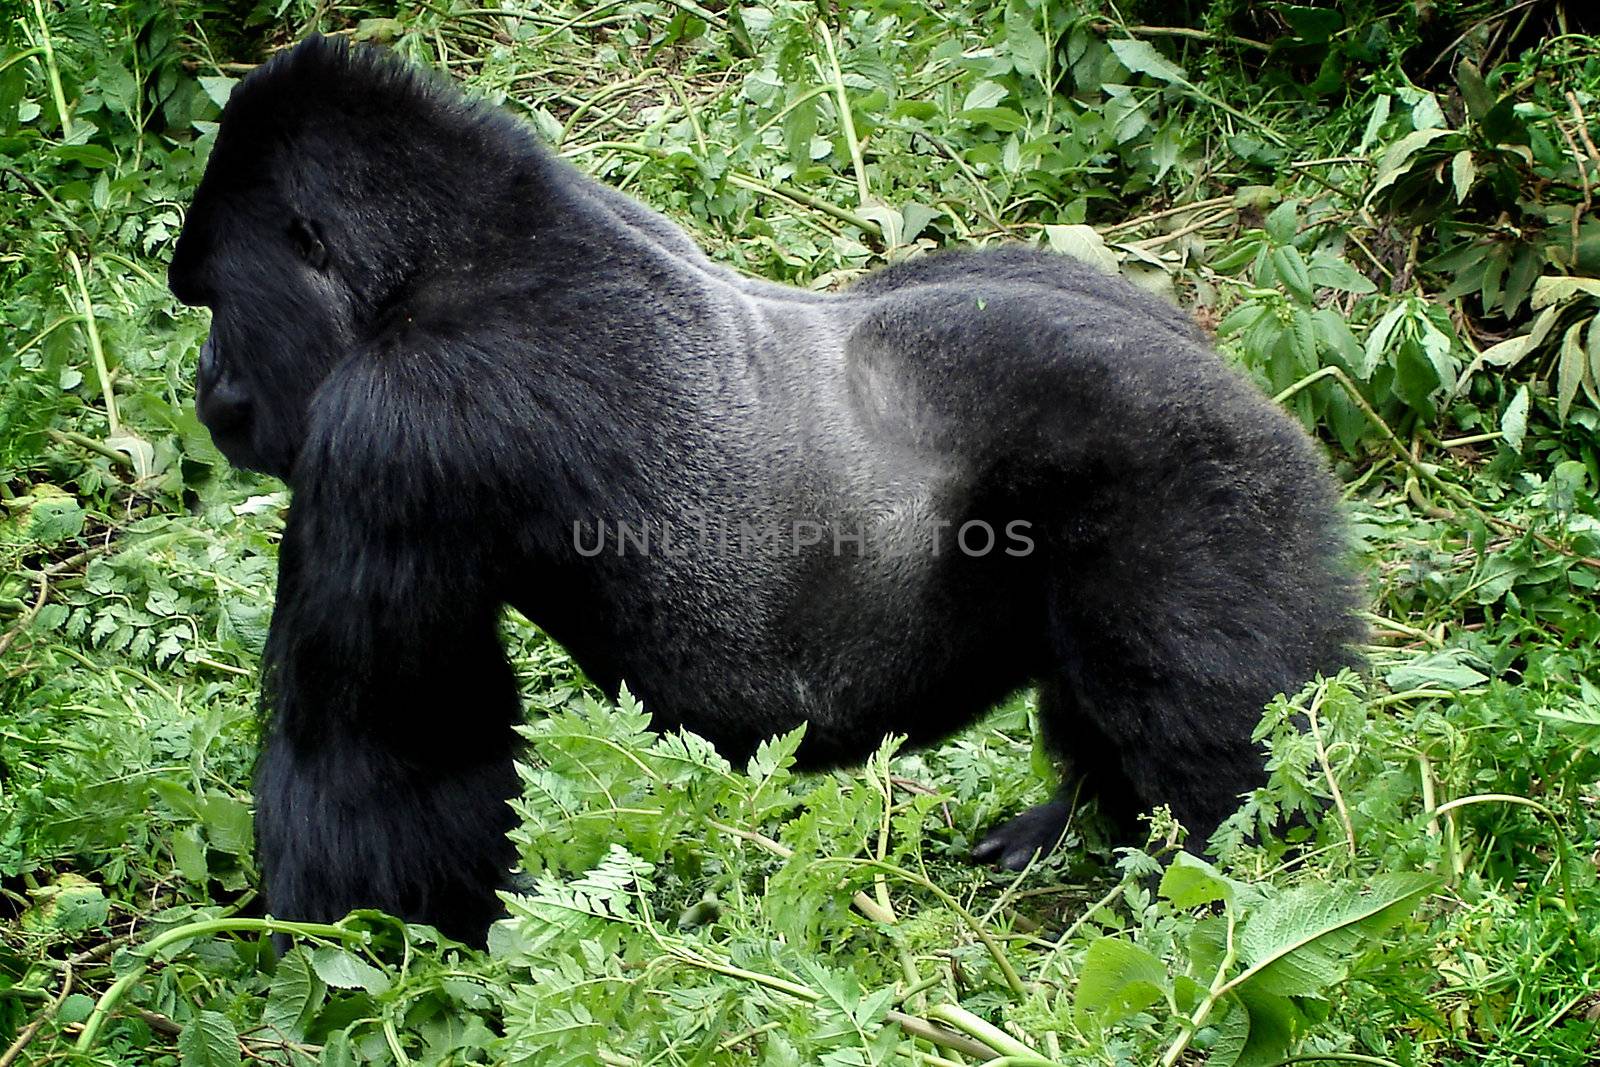 Powerful silverback gorilla in its natural habitat in Parc National des Volcans in Rwanda.